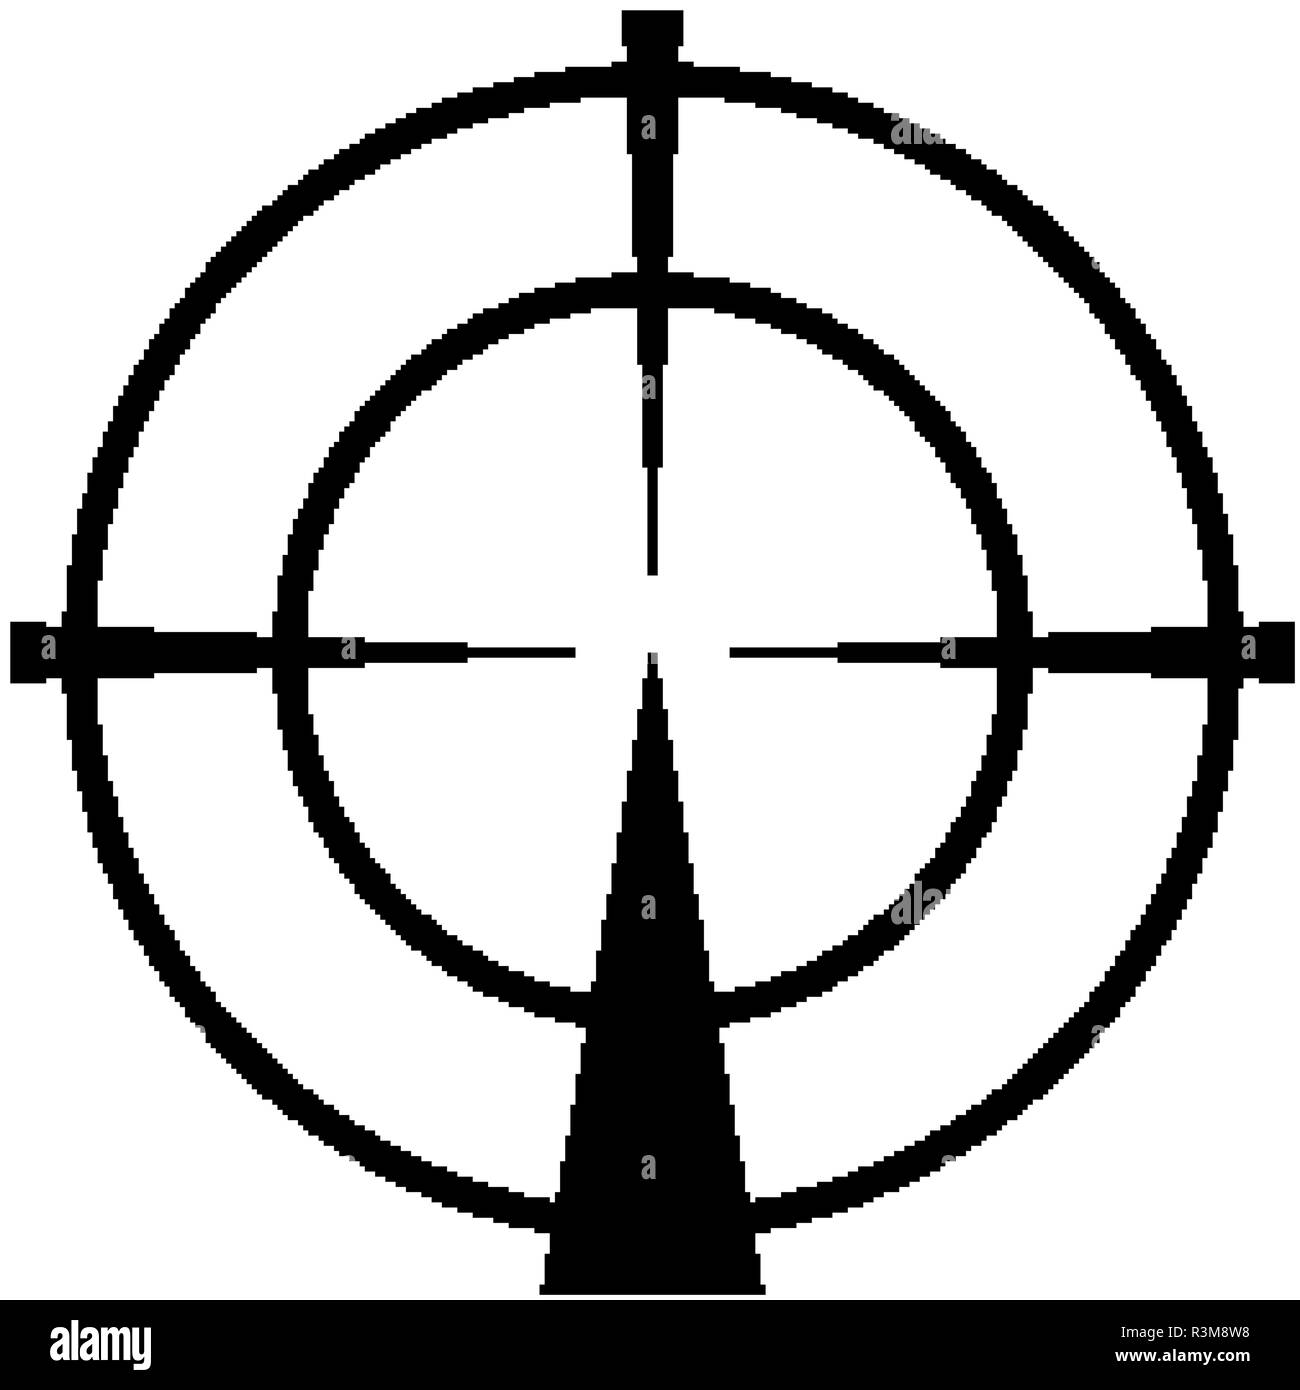 Simple sniper rifle aim target. AR crosshairs. Gun scope icon Stock Vector